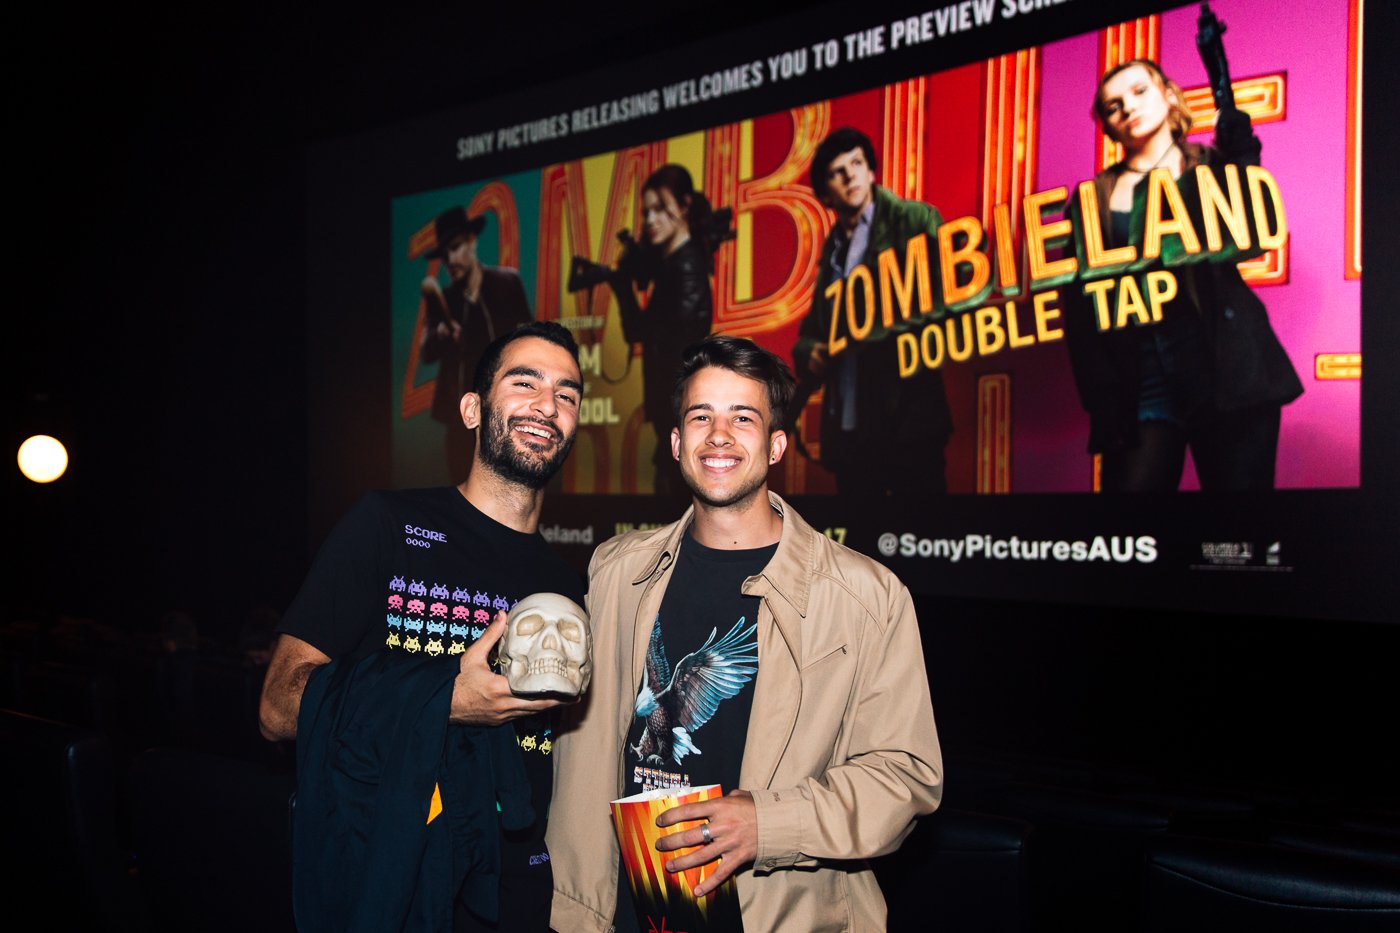 TWE’s screening of Zombieland: Double Tap